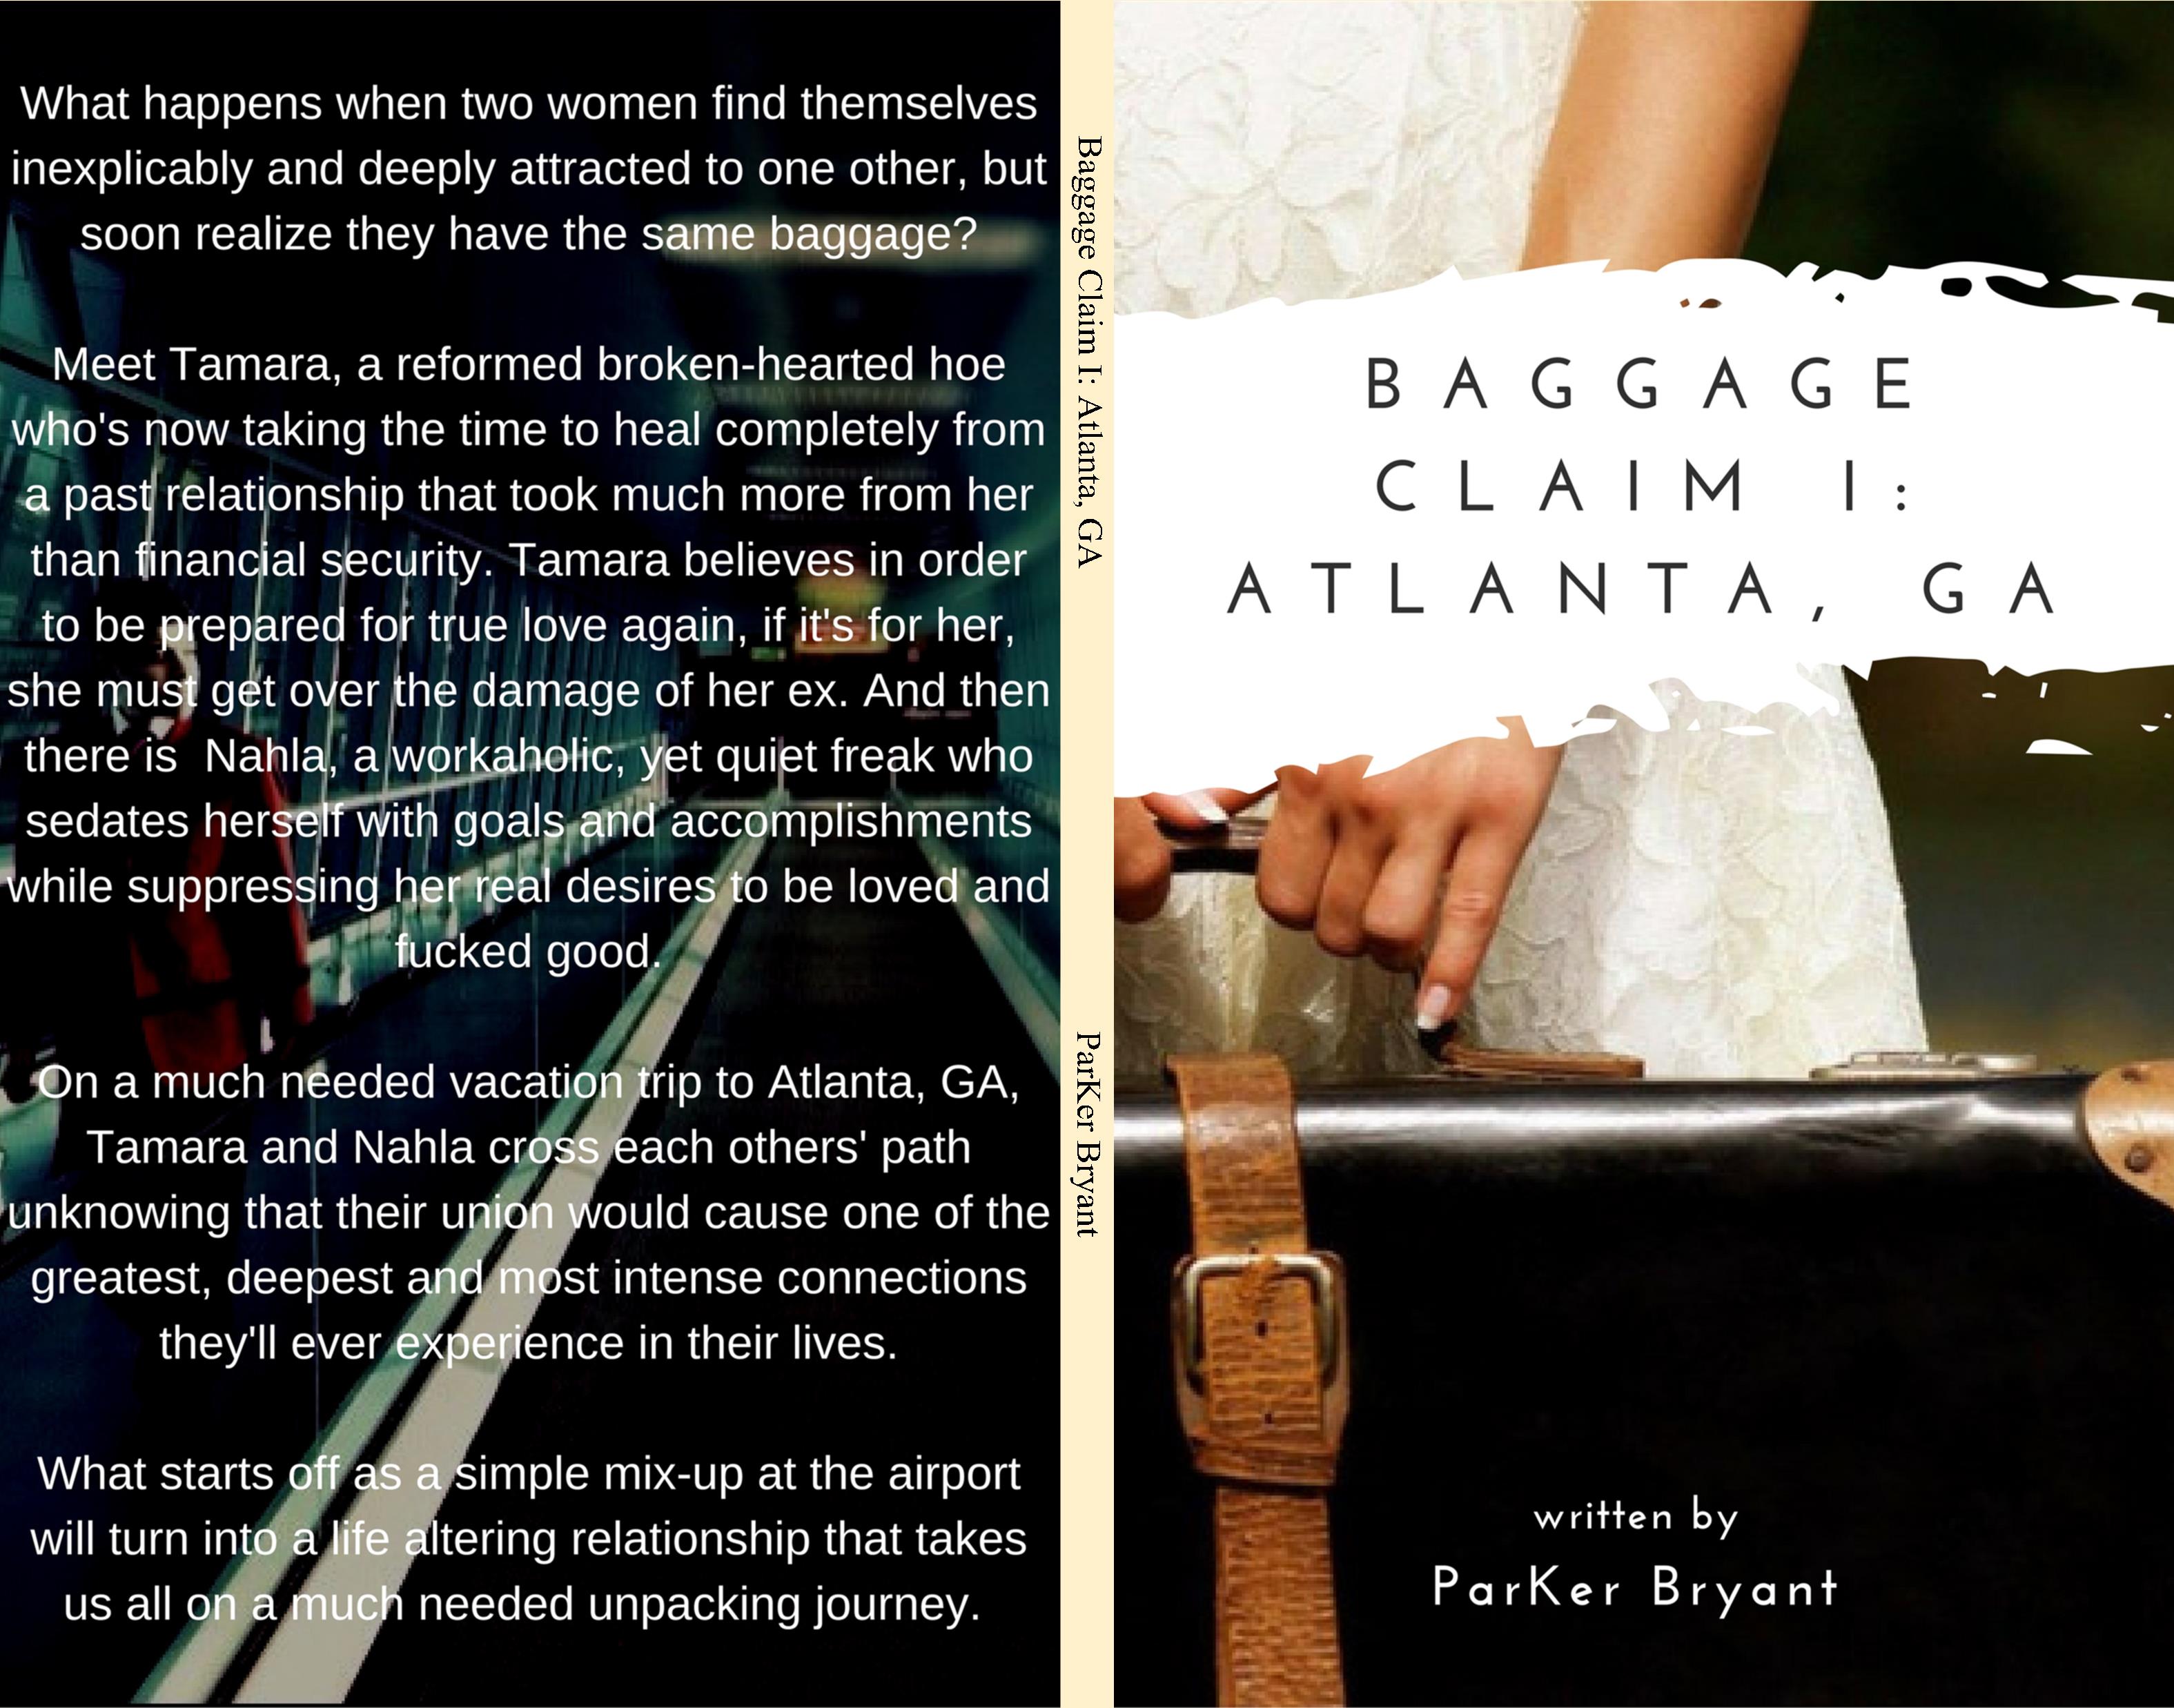 Baggage Claim I: Atlanta, GA cover image